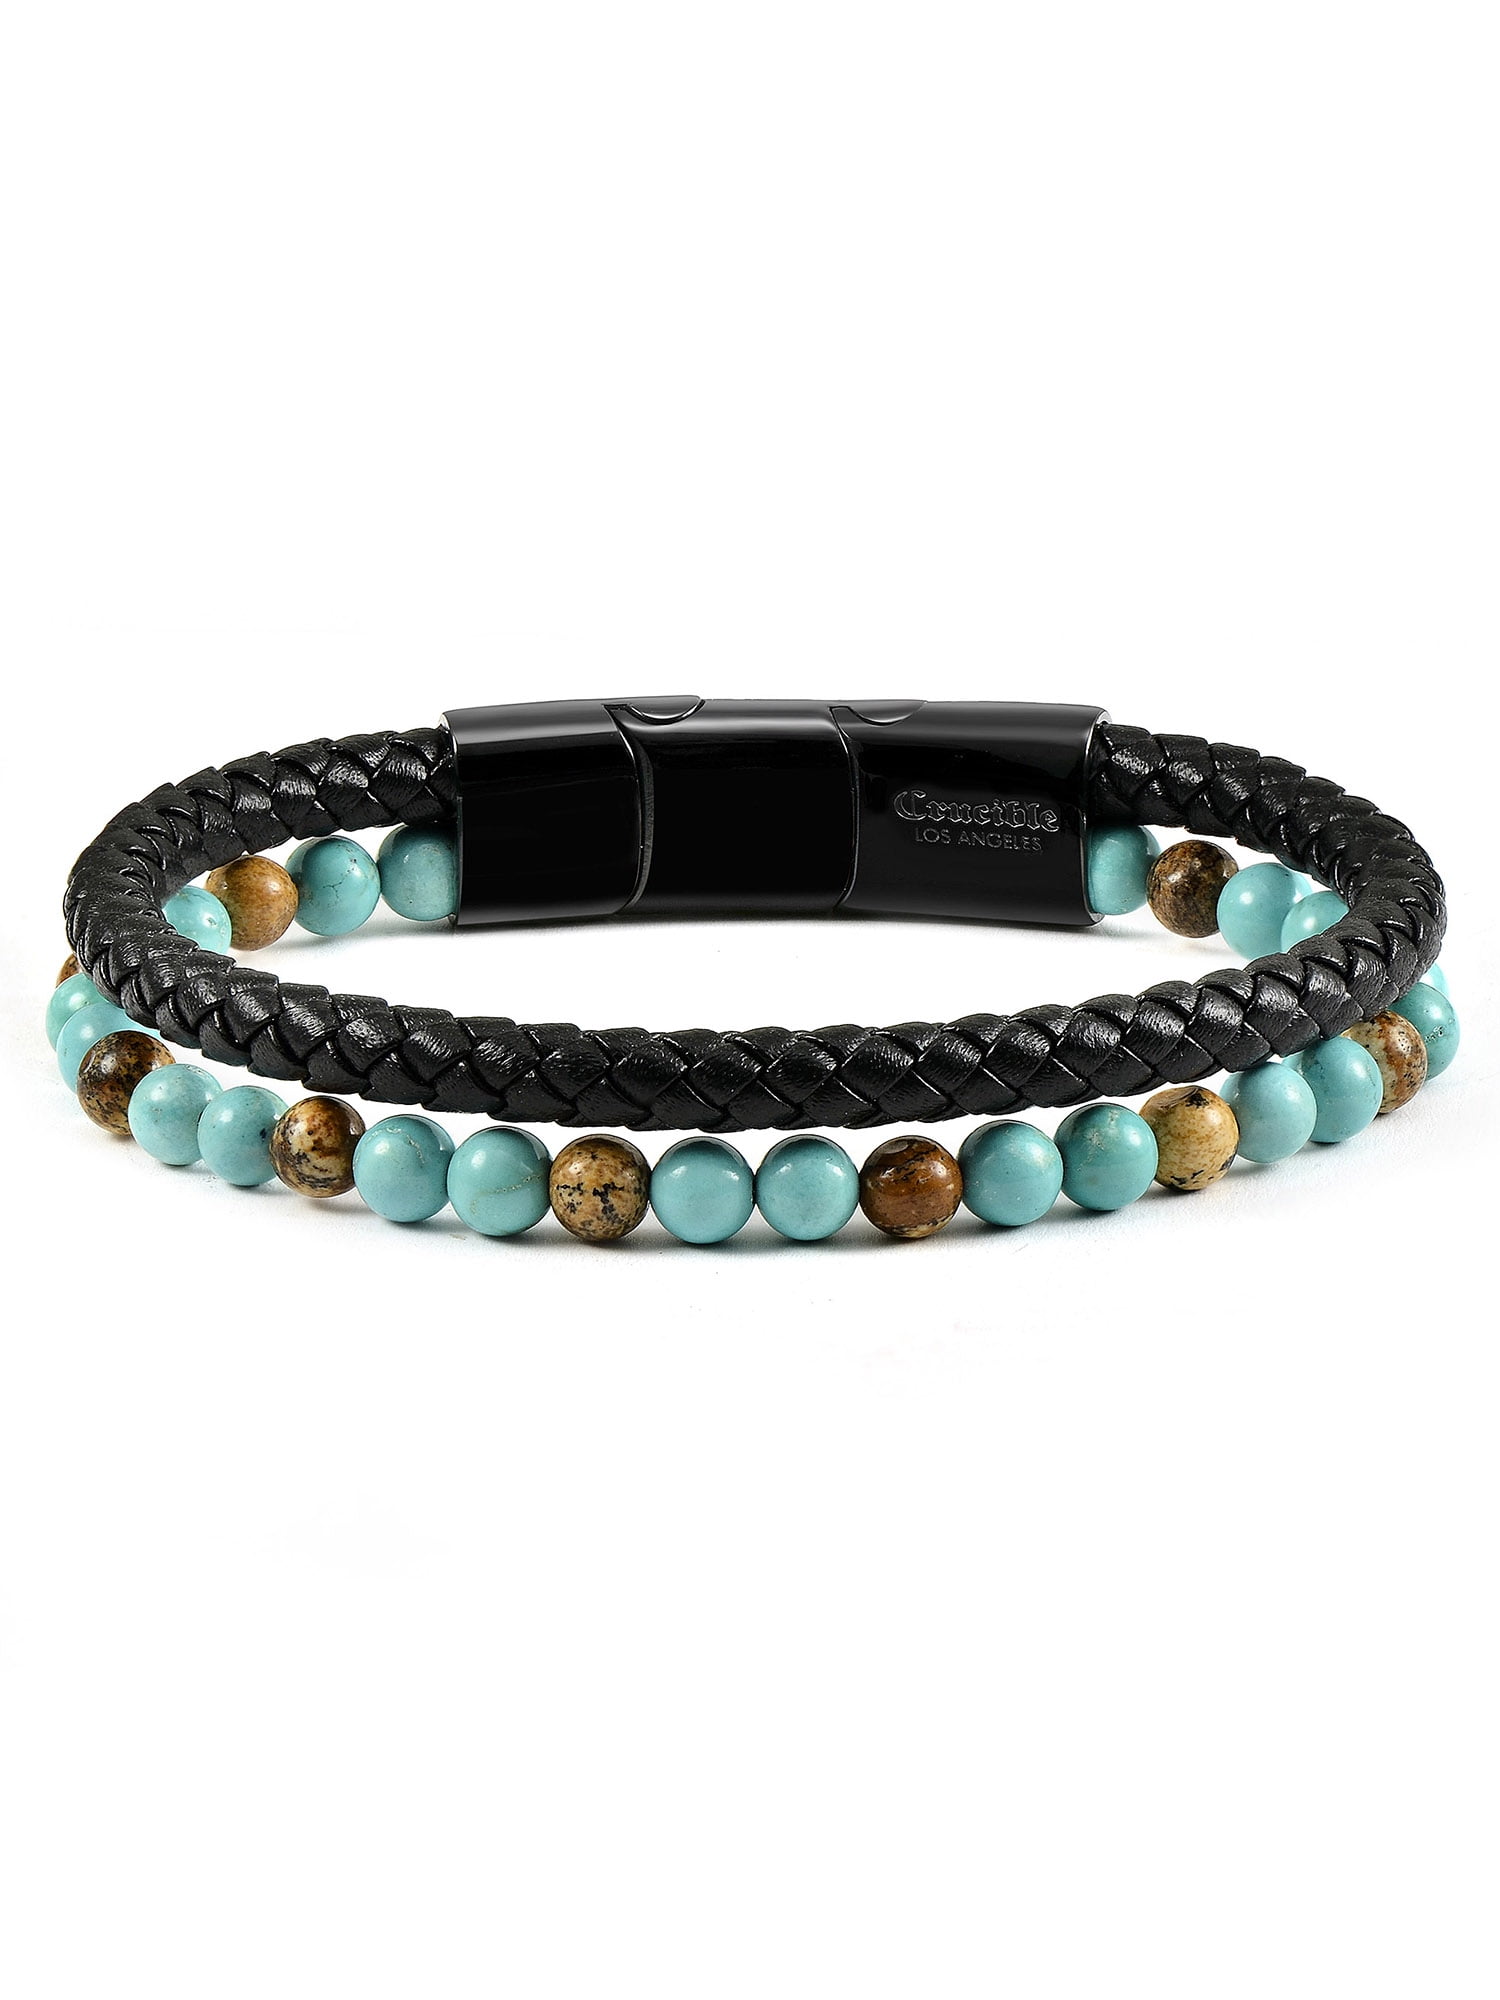 Turquoise Beads and Cross Charm Leather Bracelet  1921 CMS Length   Nirvana Gems  Jewels